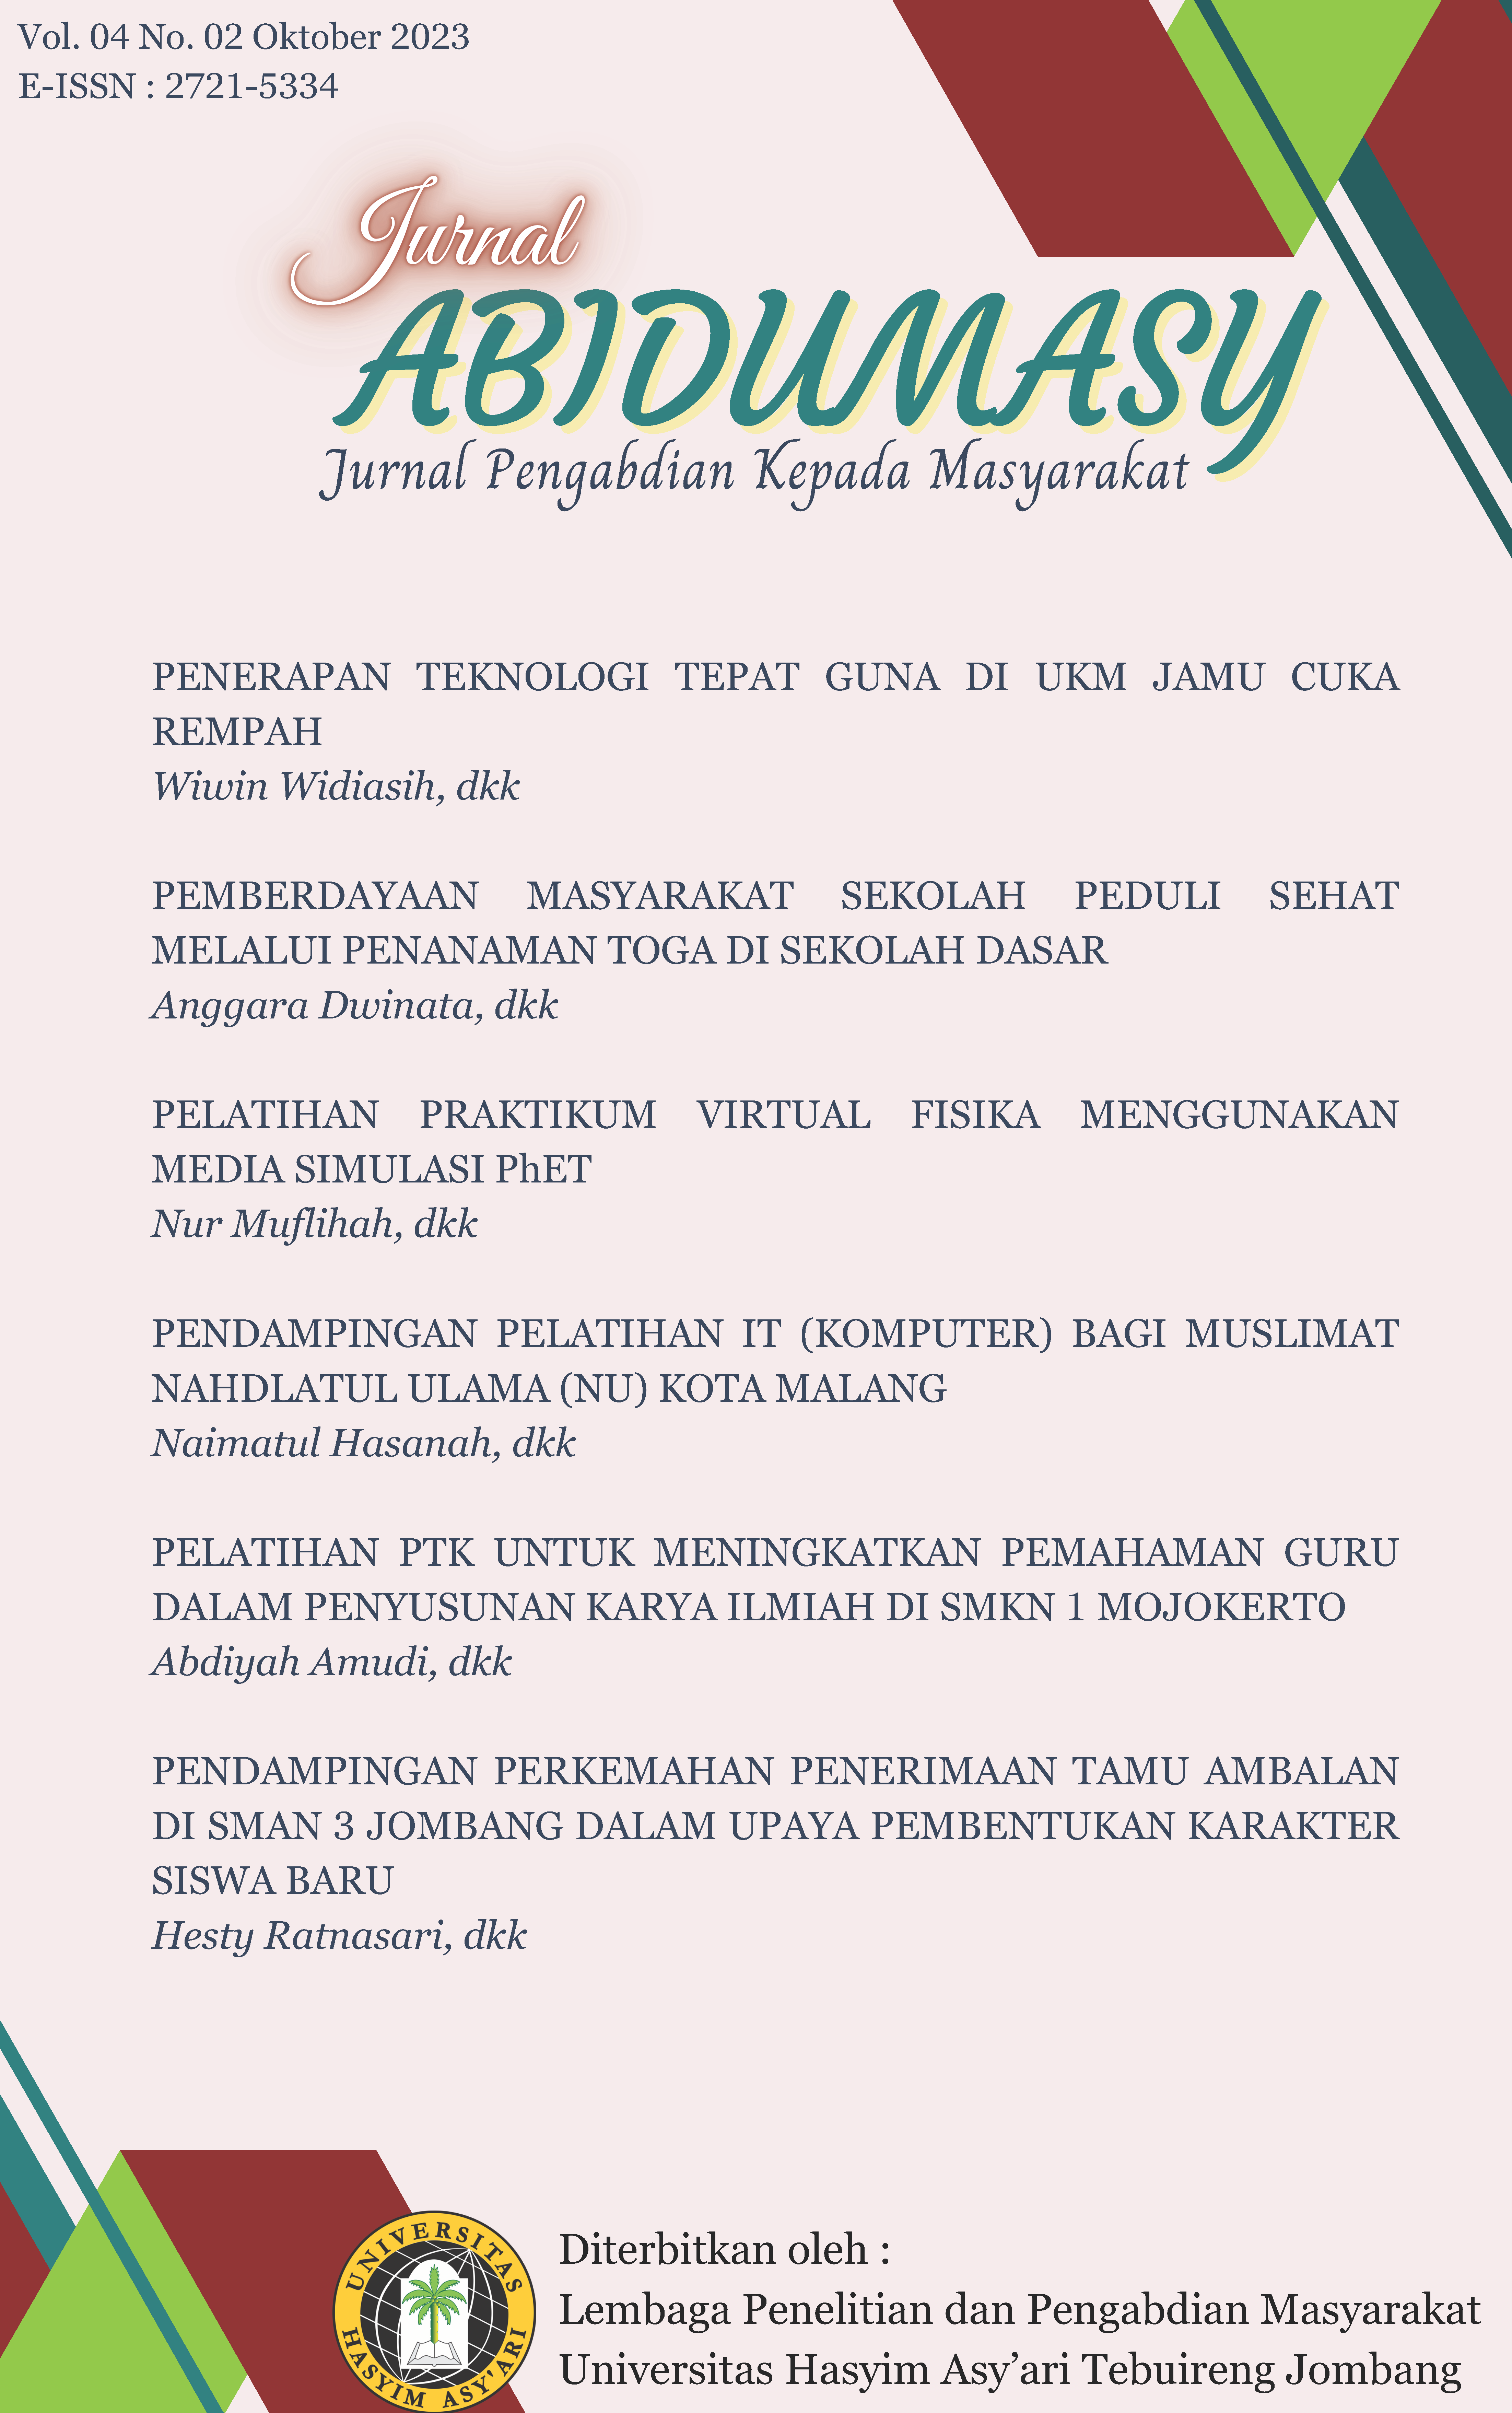 					View Vol. 4 No. 02 (2023): ABIDUMASY : JURNAL PENGABDIAN KEPADA MASYARAKAT
				